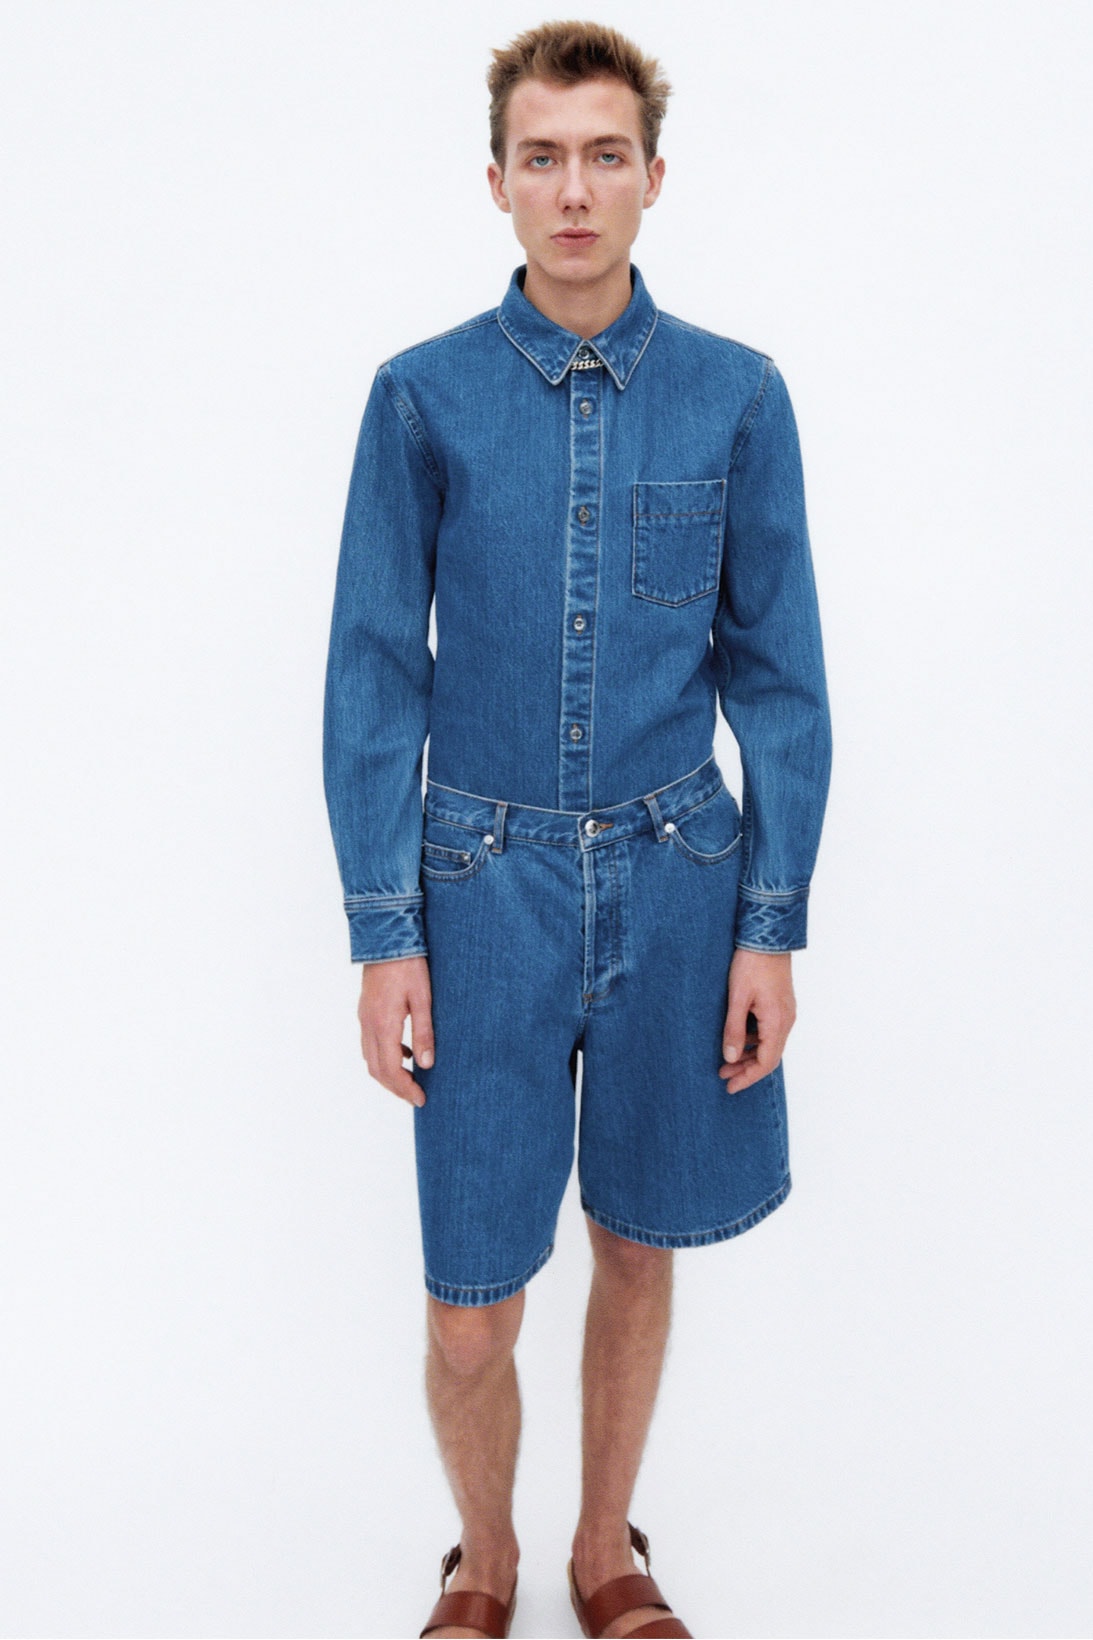 apc spring summer 2021 collection lookbook minimalist jeans denim shirts bags accessories